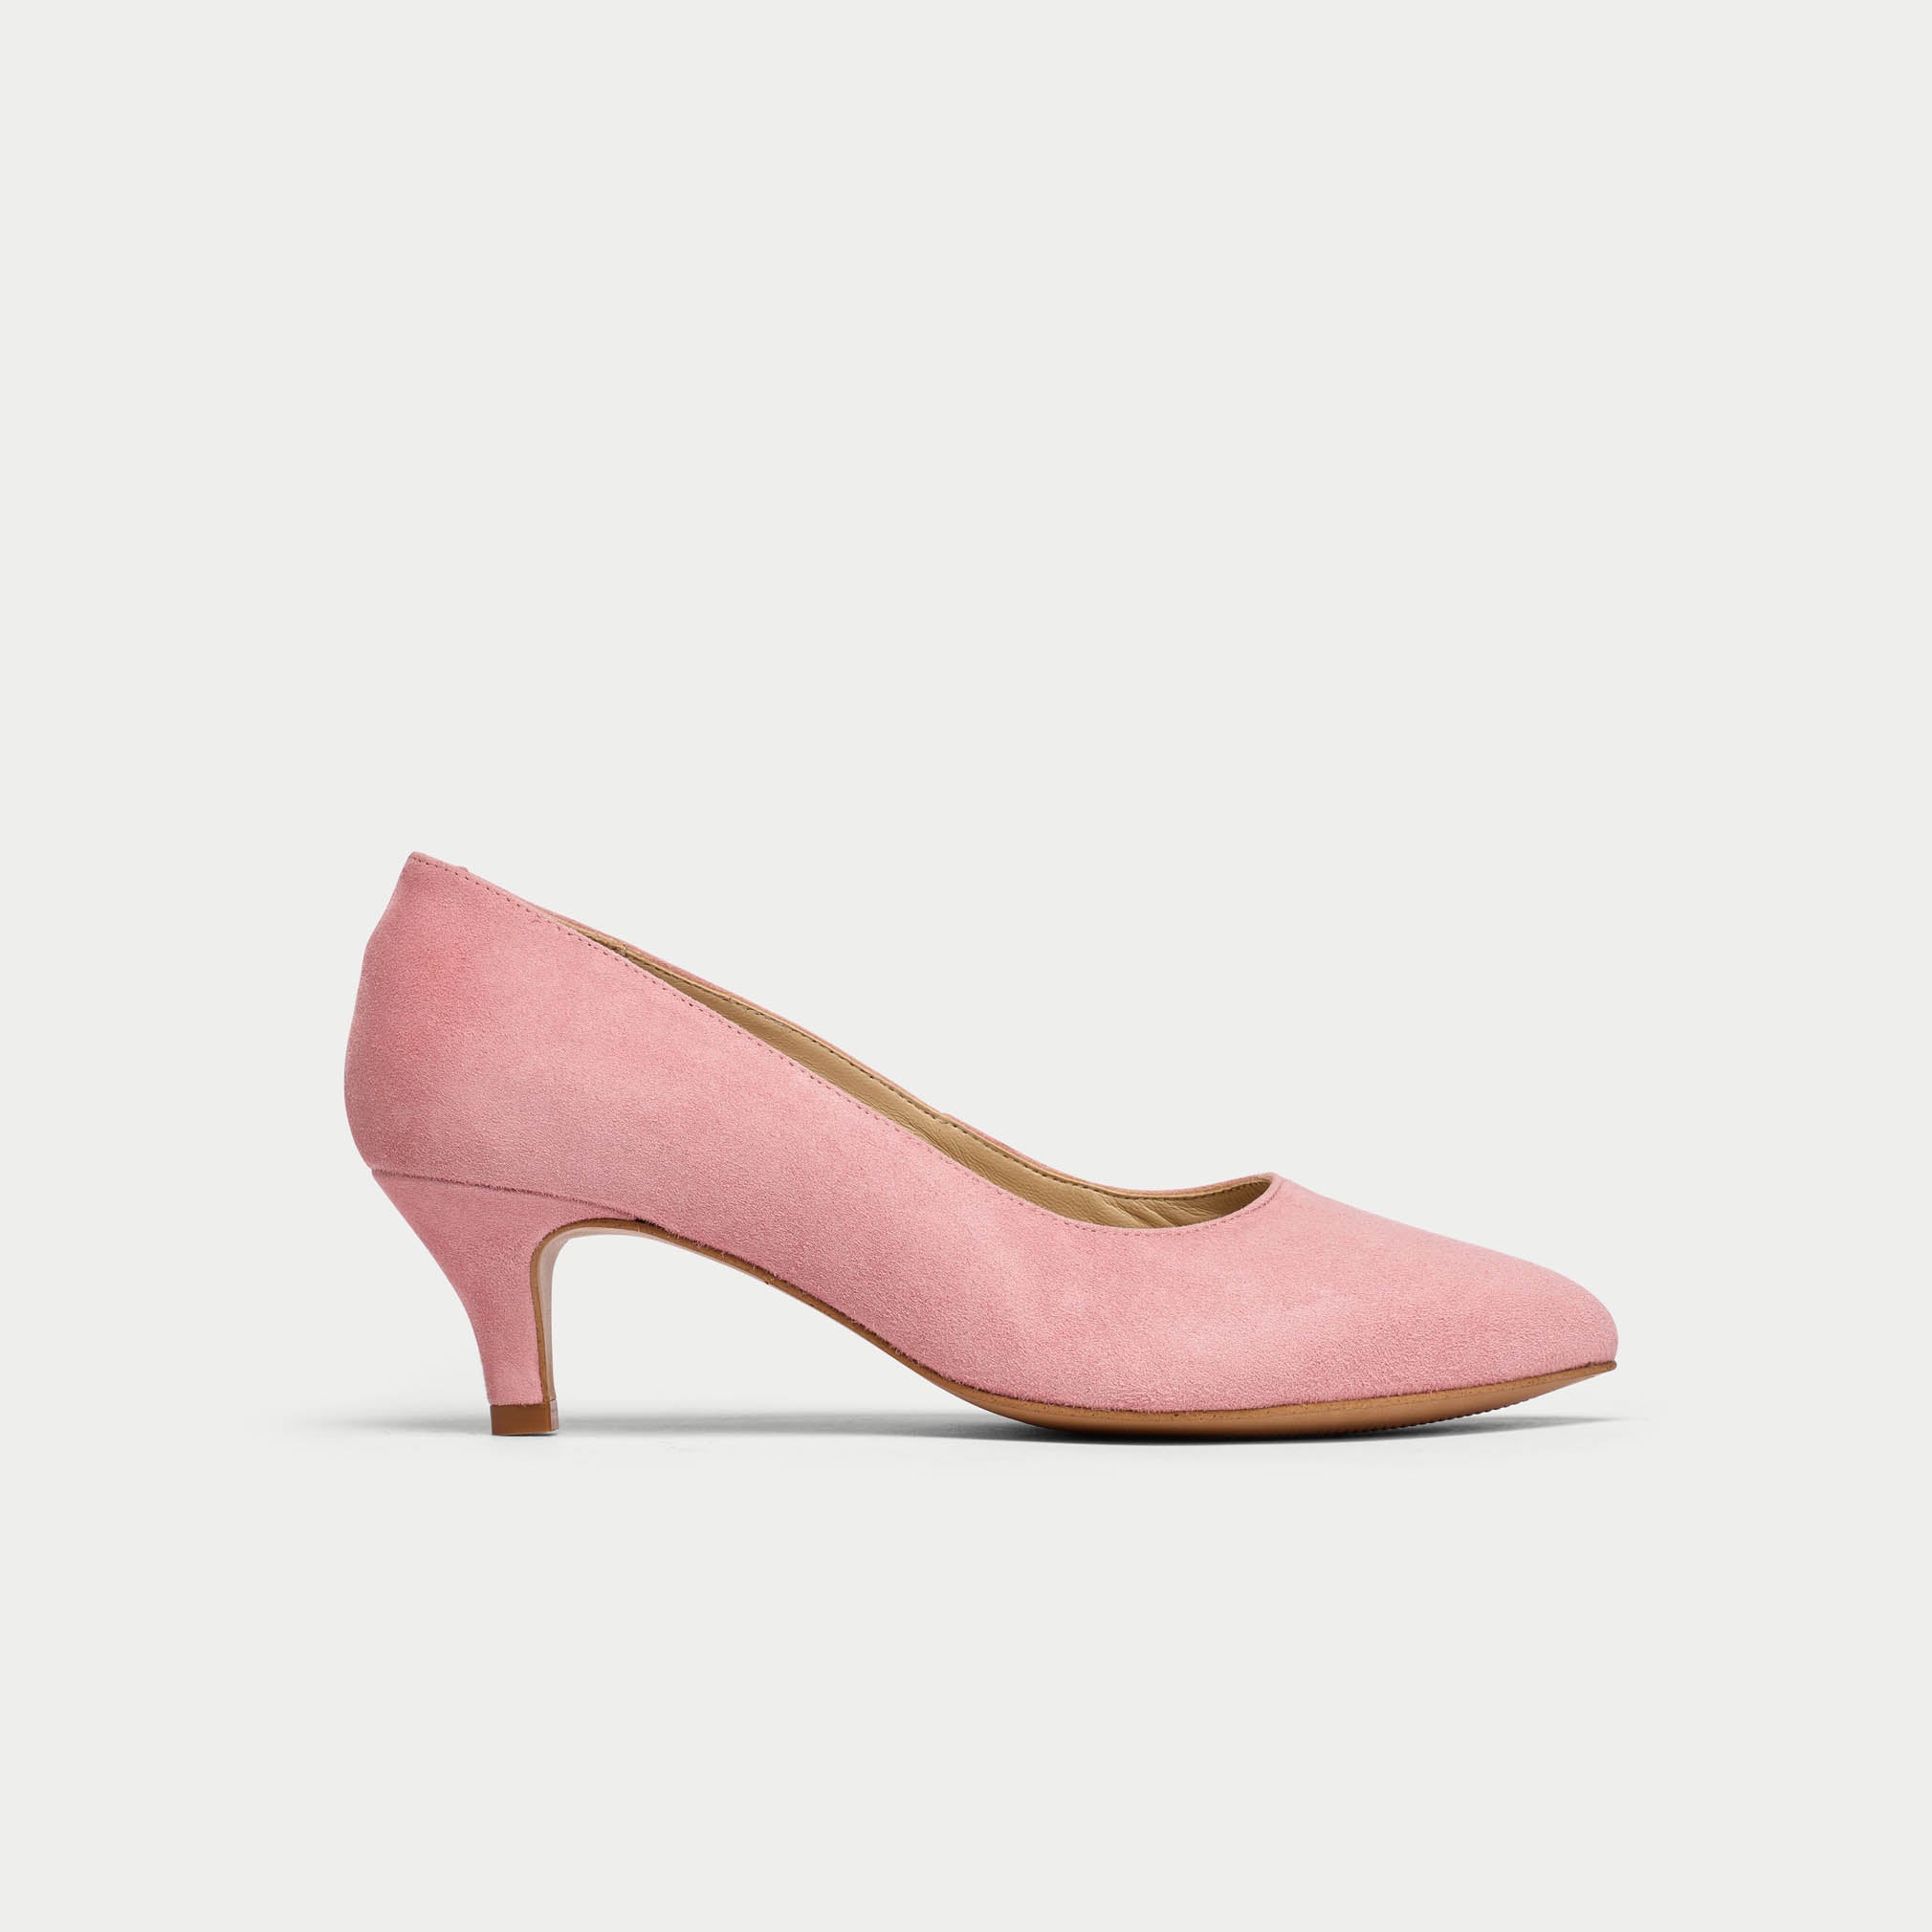 Buy Do Bhai Stylish Western Embellished Pink Heels for Women & Girls /UK3  at Amazon.in